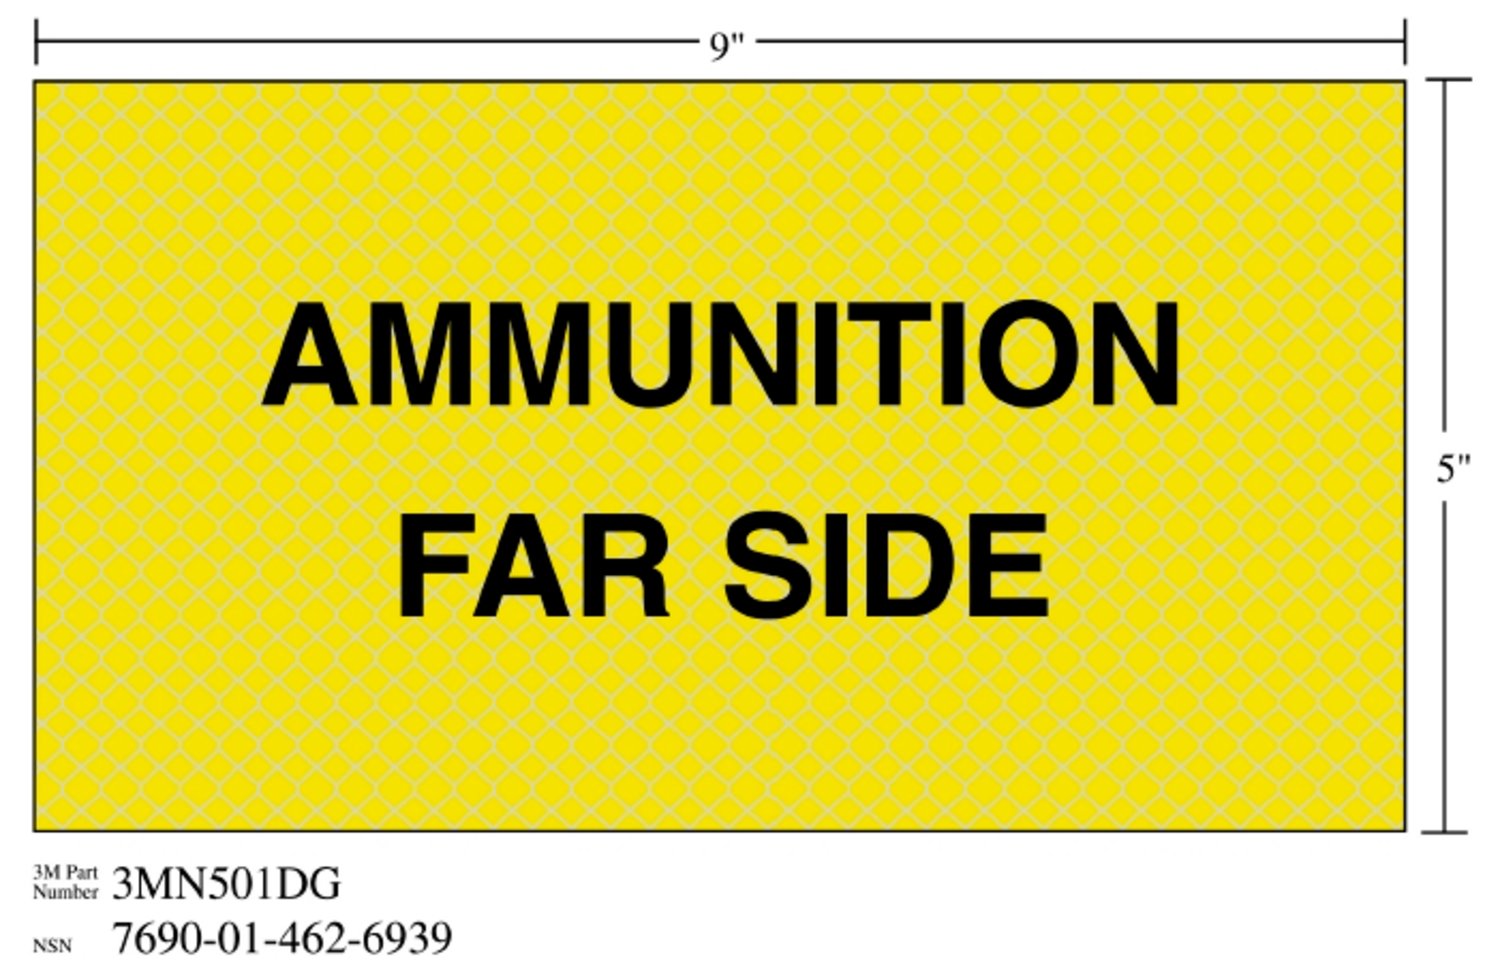 7010389844 - 3M Diamond Grade Weapon Sign 3MN501DG, "AMMUN…SIDE", 9 in x 5 in, 10/Package